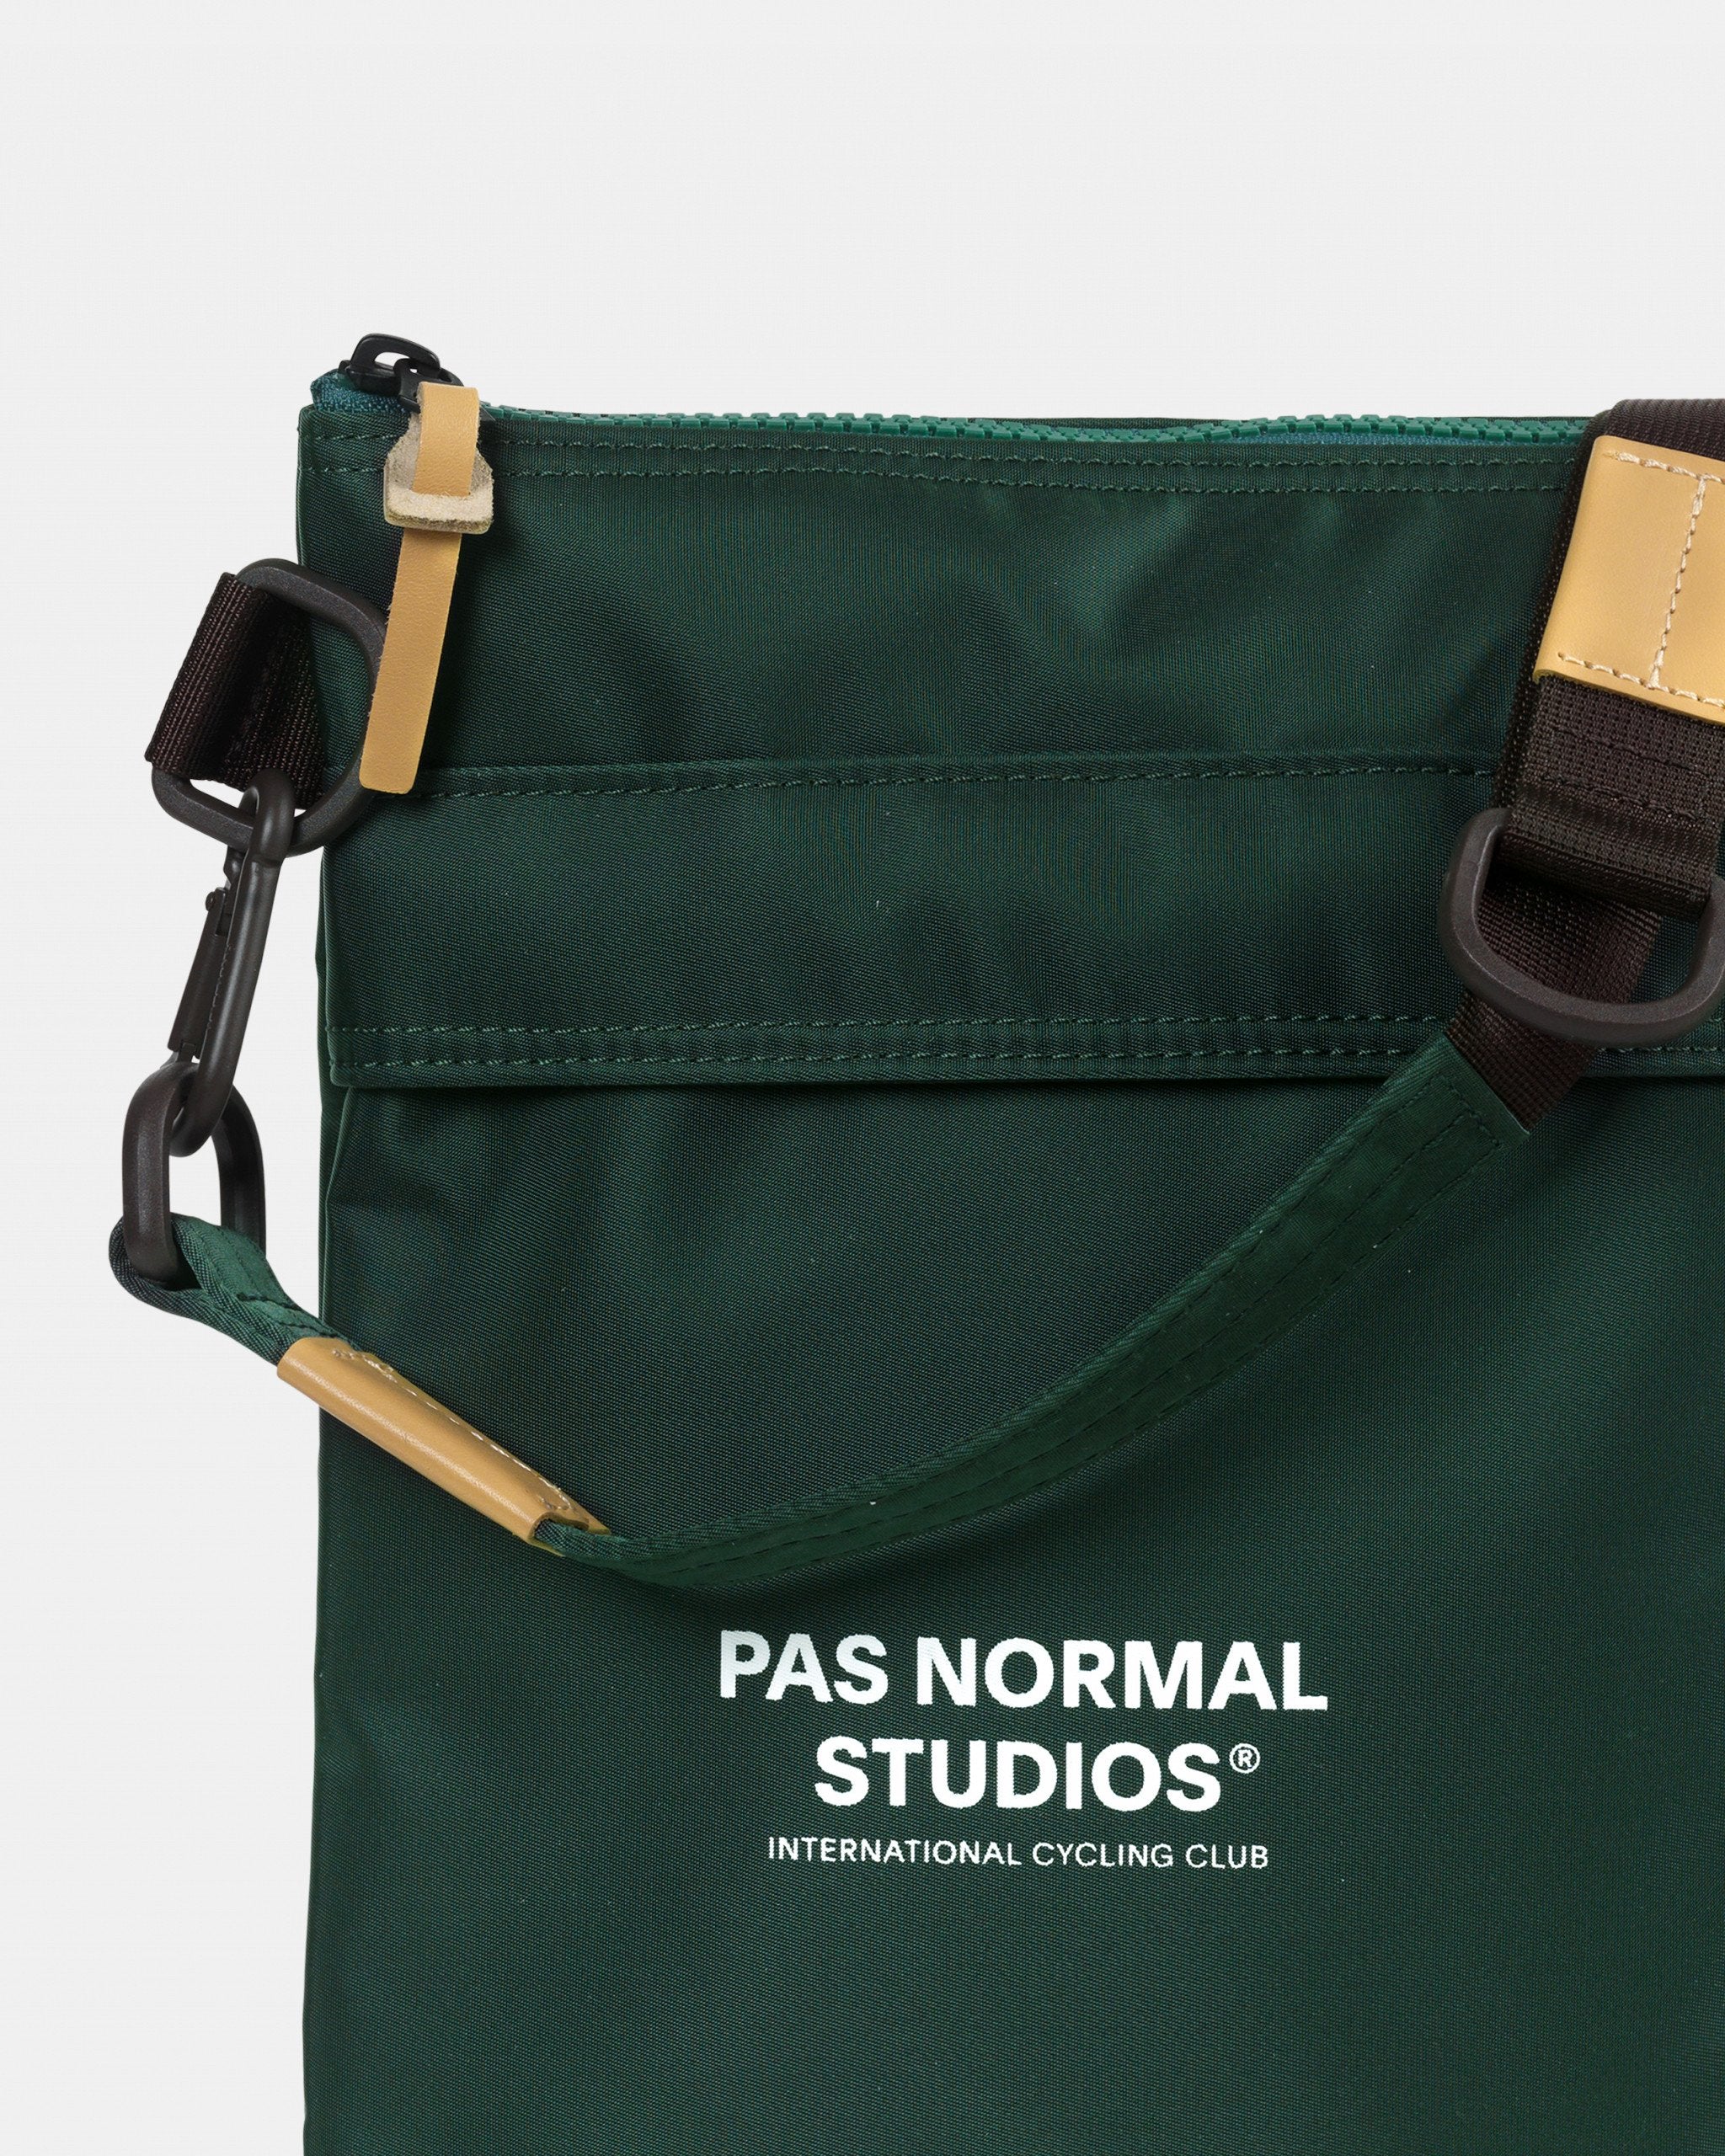 Pas Normal Studios - About Porter-Yoshida | Porter yoshida, Custom saddle  bags, Functional bag